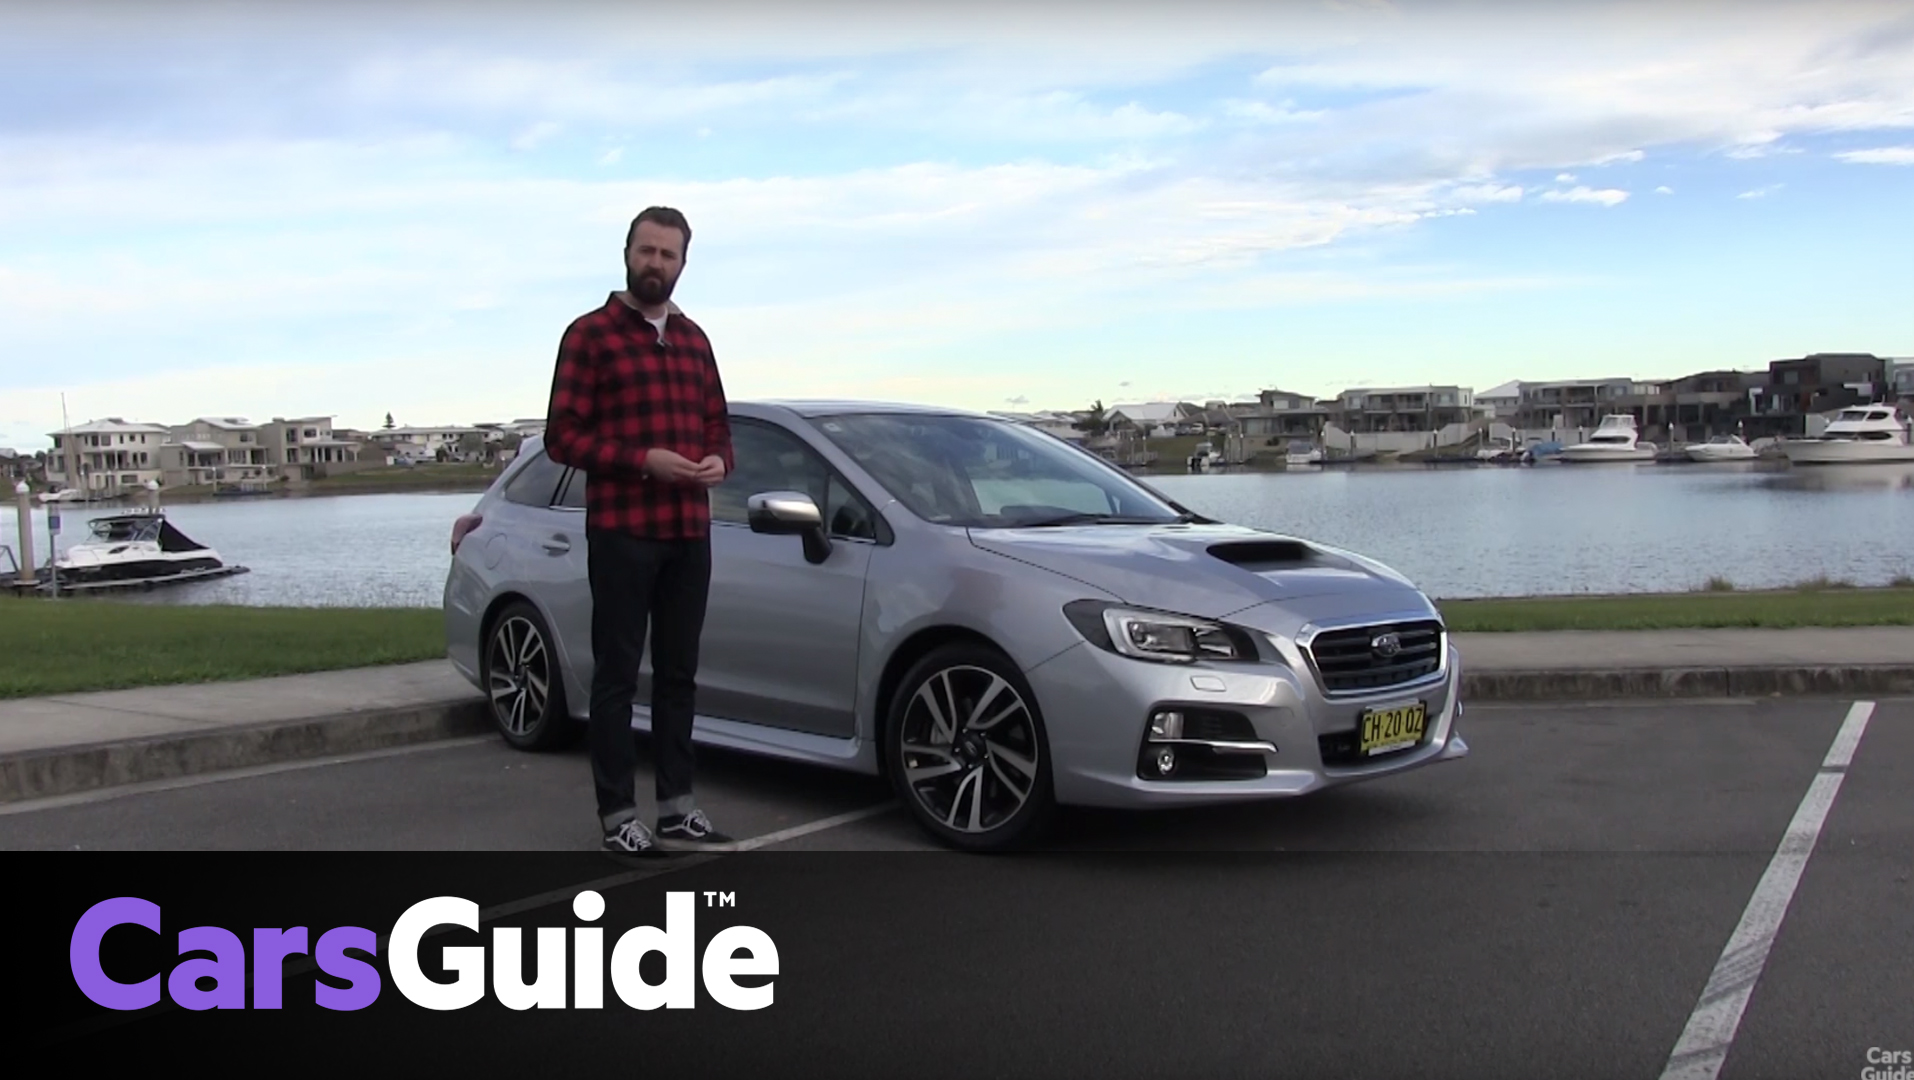 2016 Subaru Levorg review | CarsGuide1914 x 1080